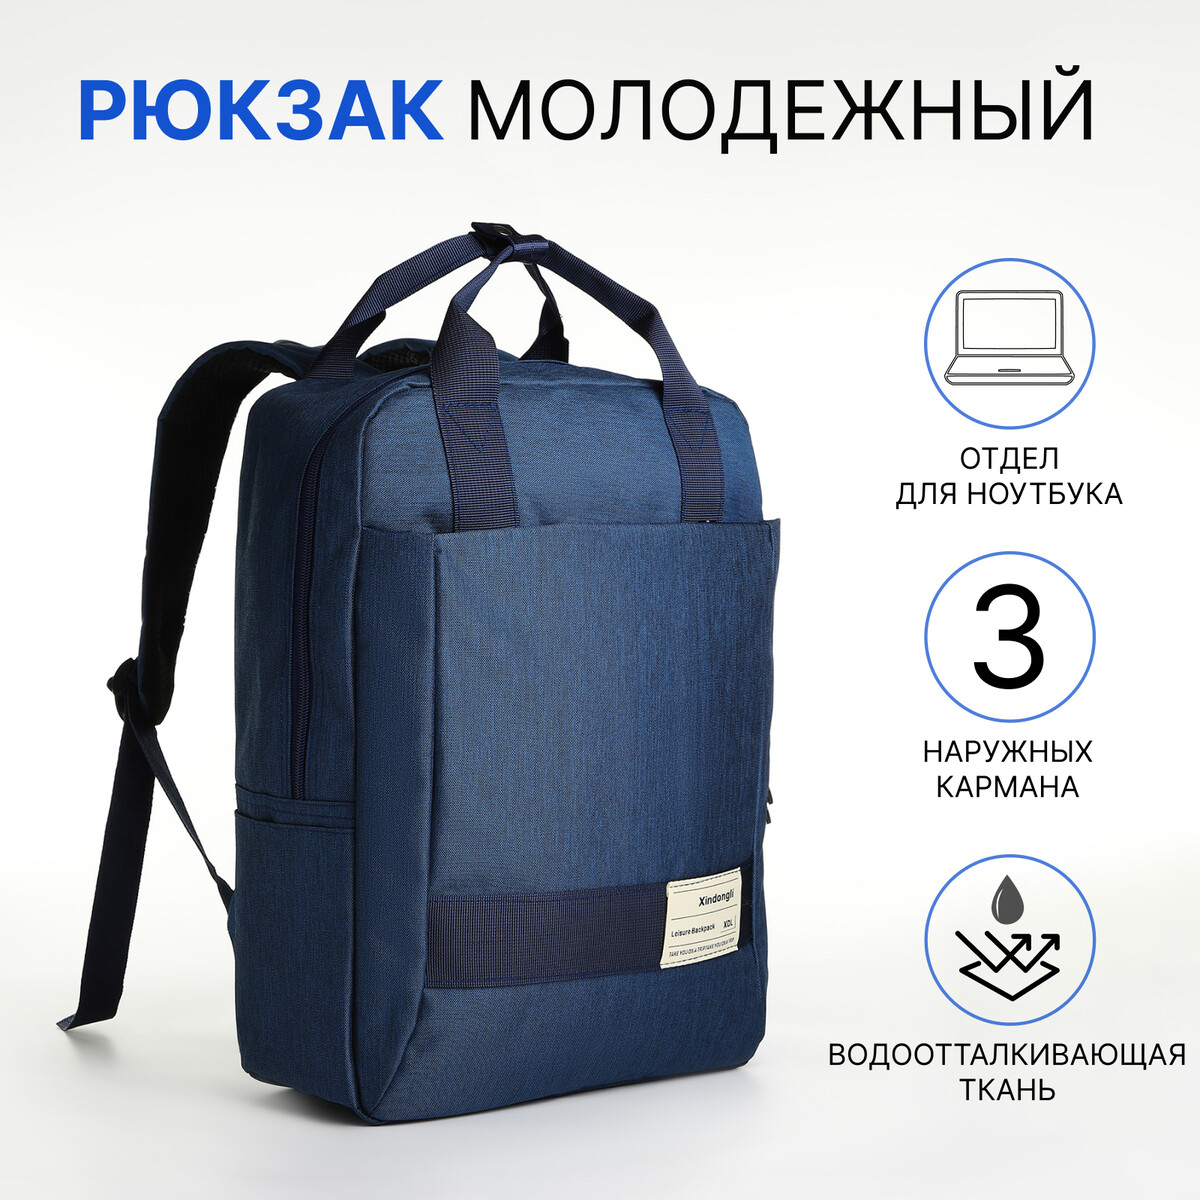 Рюкзак-сумка из текстиля на молнии, 3 кармана, отдел для ноутбука, цвет синий рюкзак торба dark cat 45х20х25 отдел на стяжке шнурком желтый